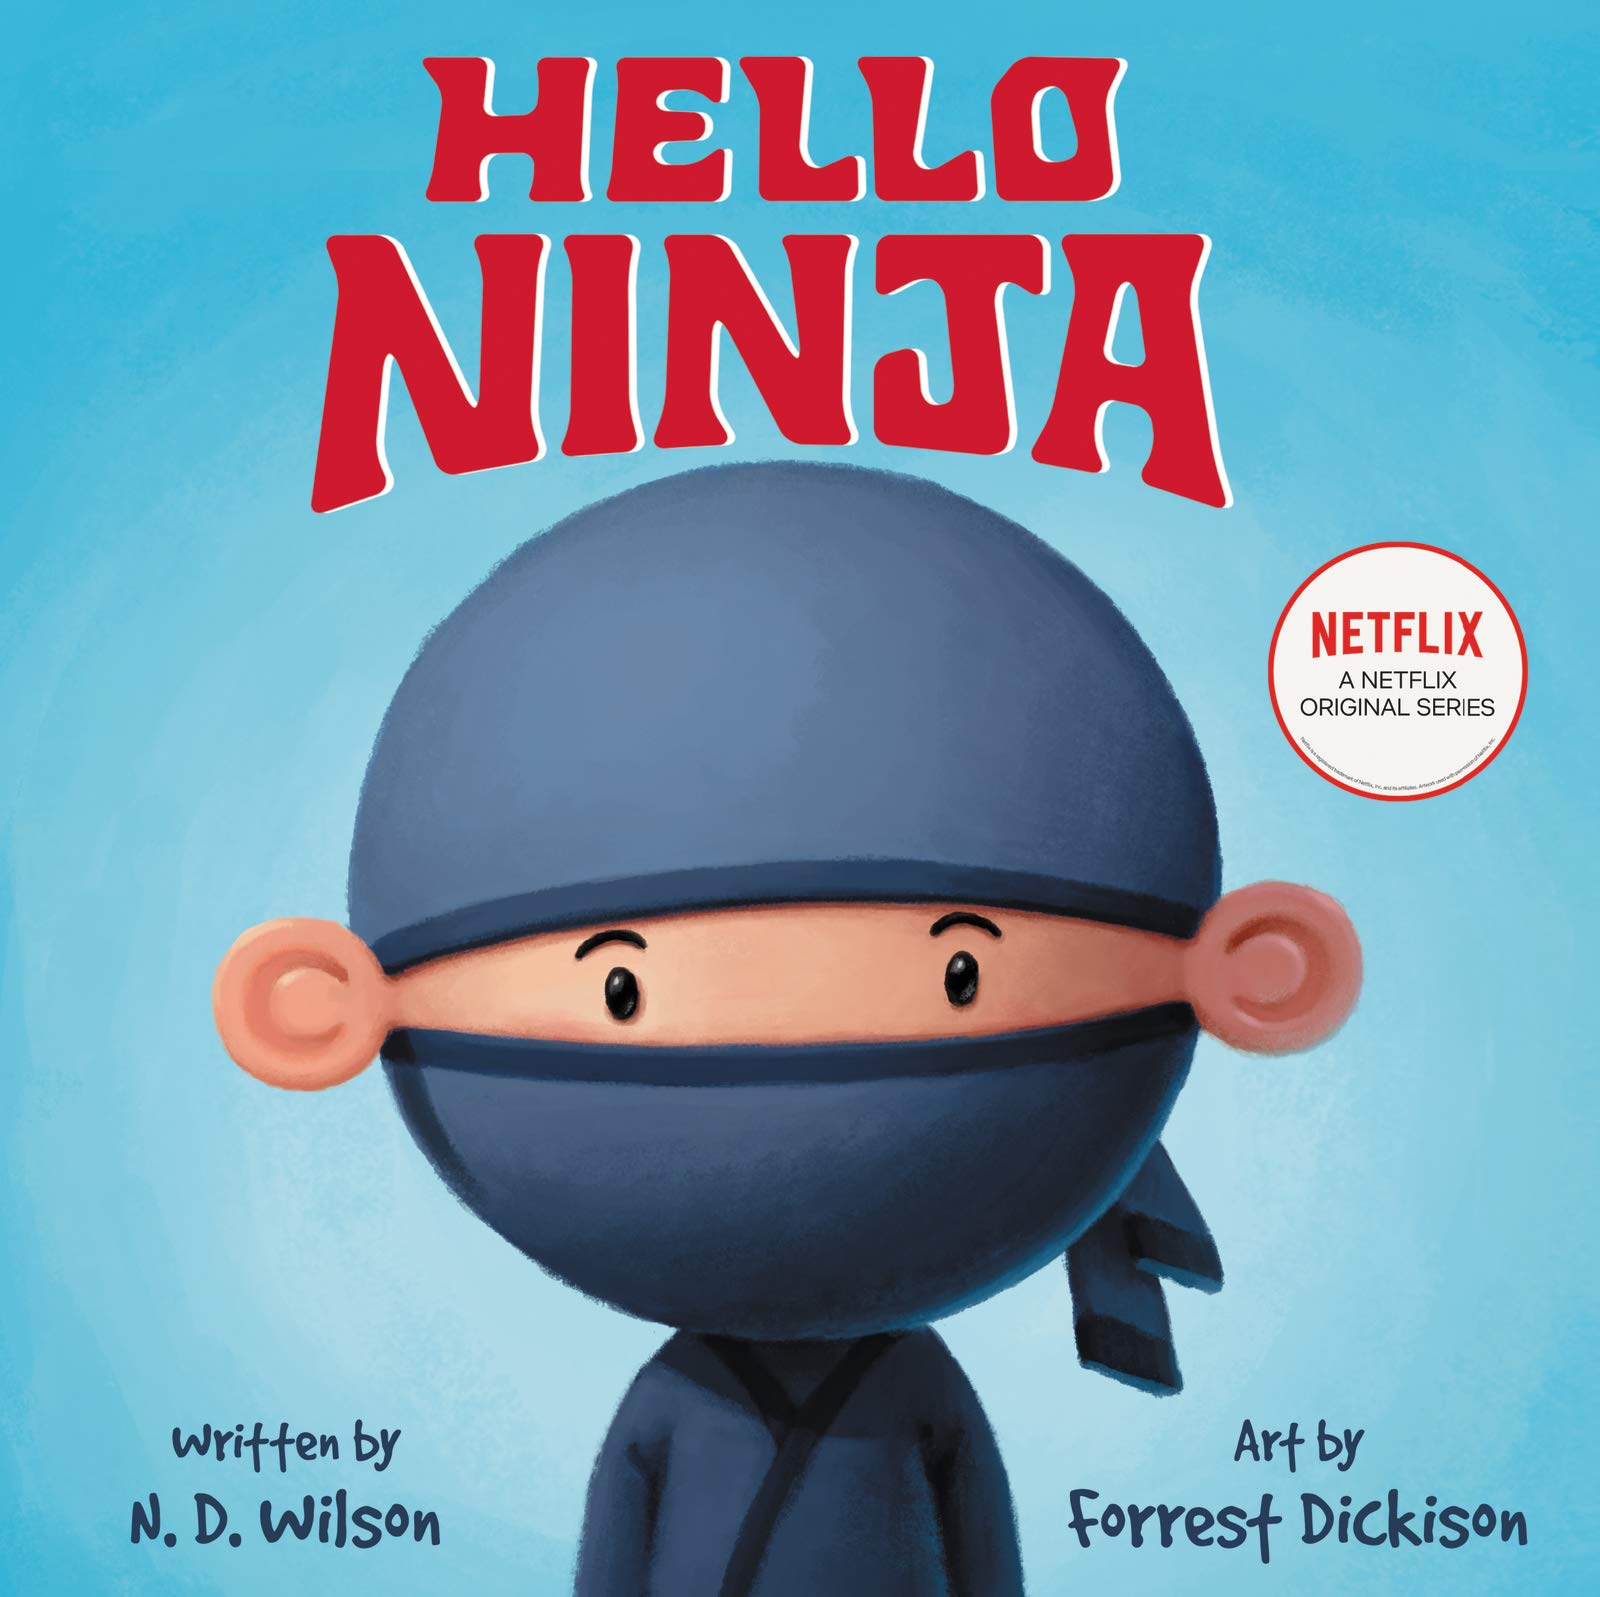 Book cover for "Hello, Ninja"